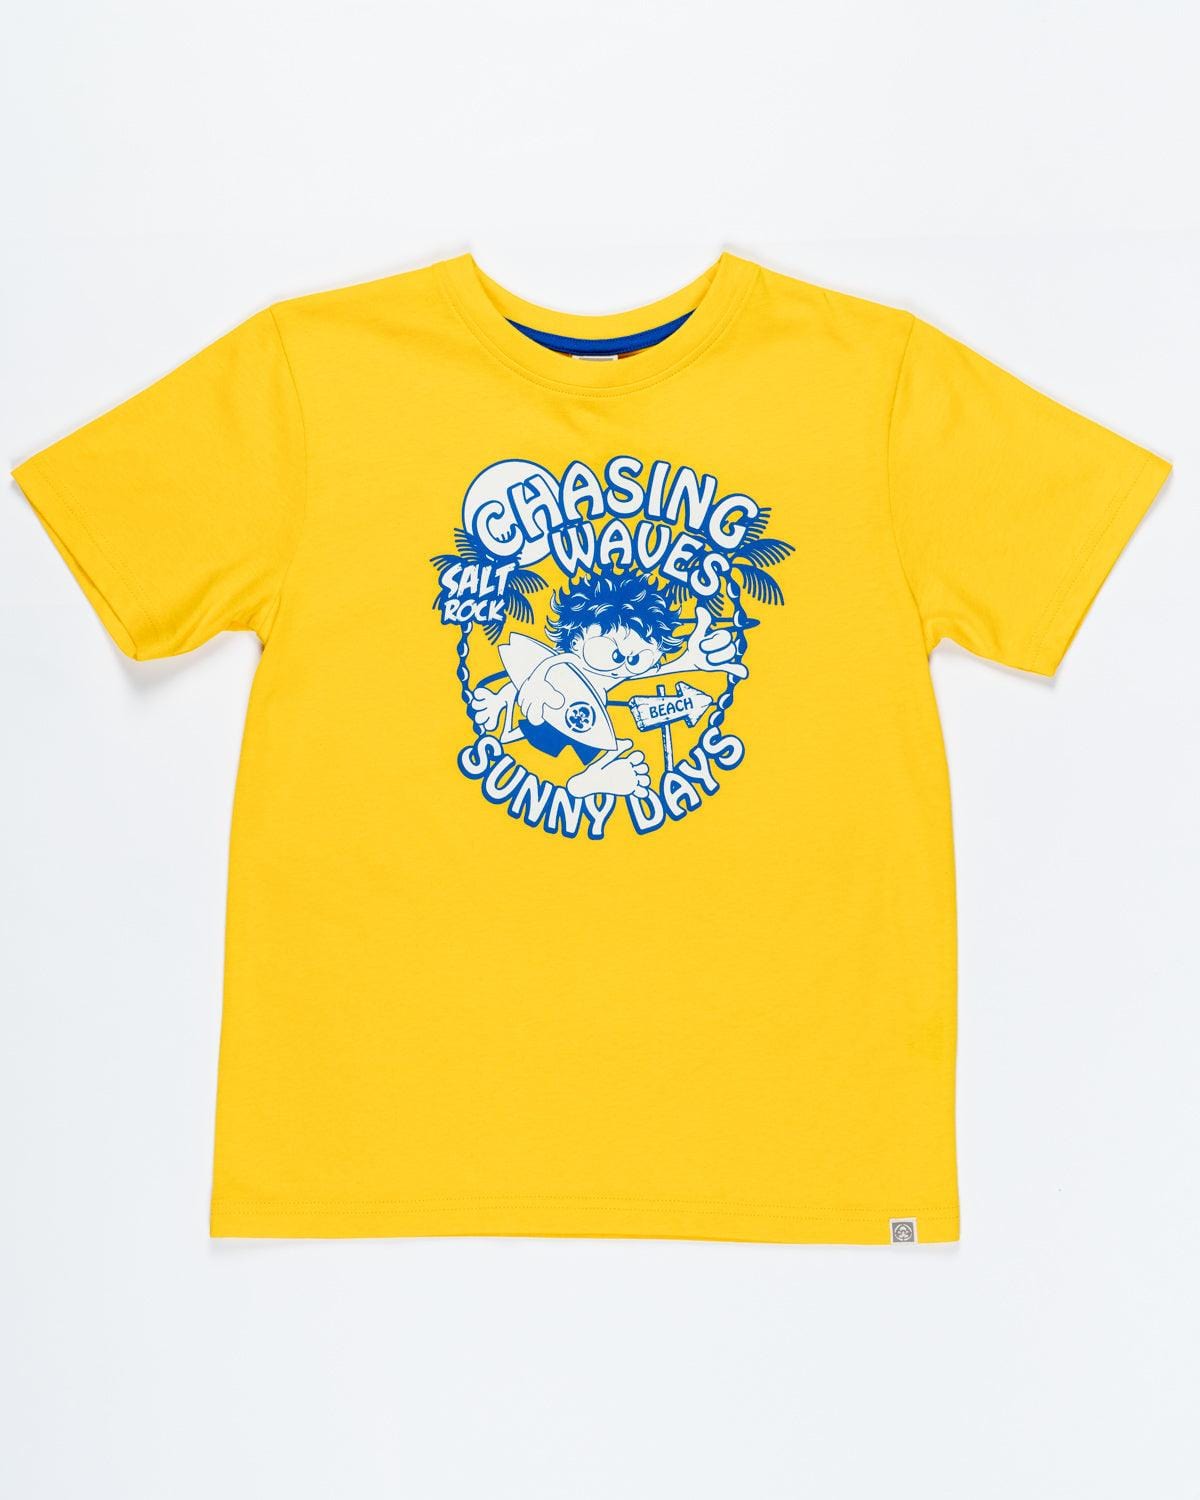 Chasing Waves Kids Short Sleeve T-Shirt